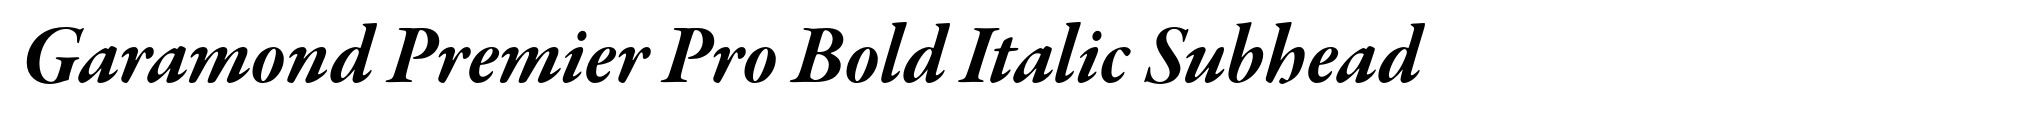 Garamond Premier Pro Bold Italic Subhead image